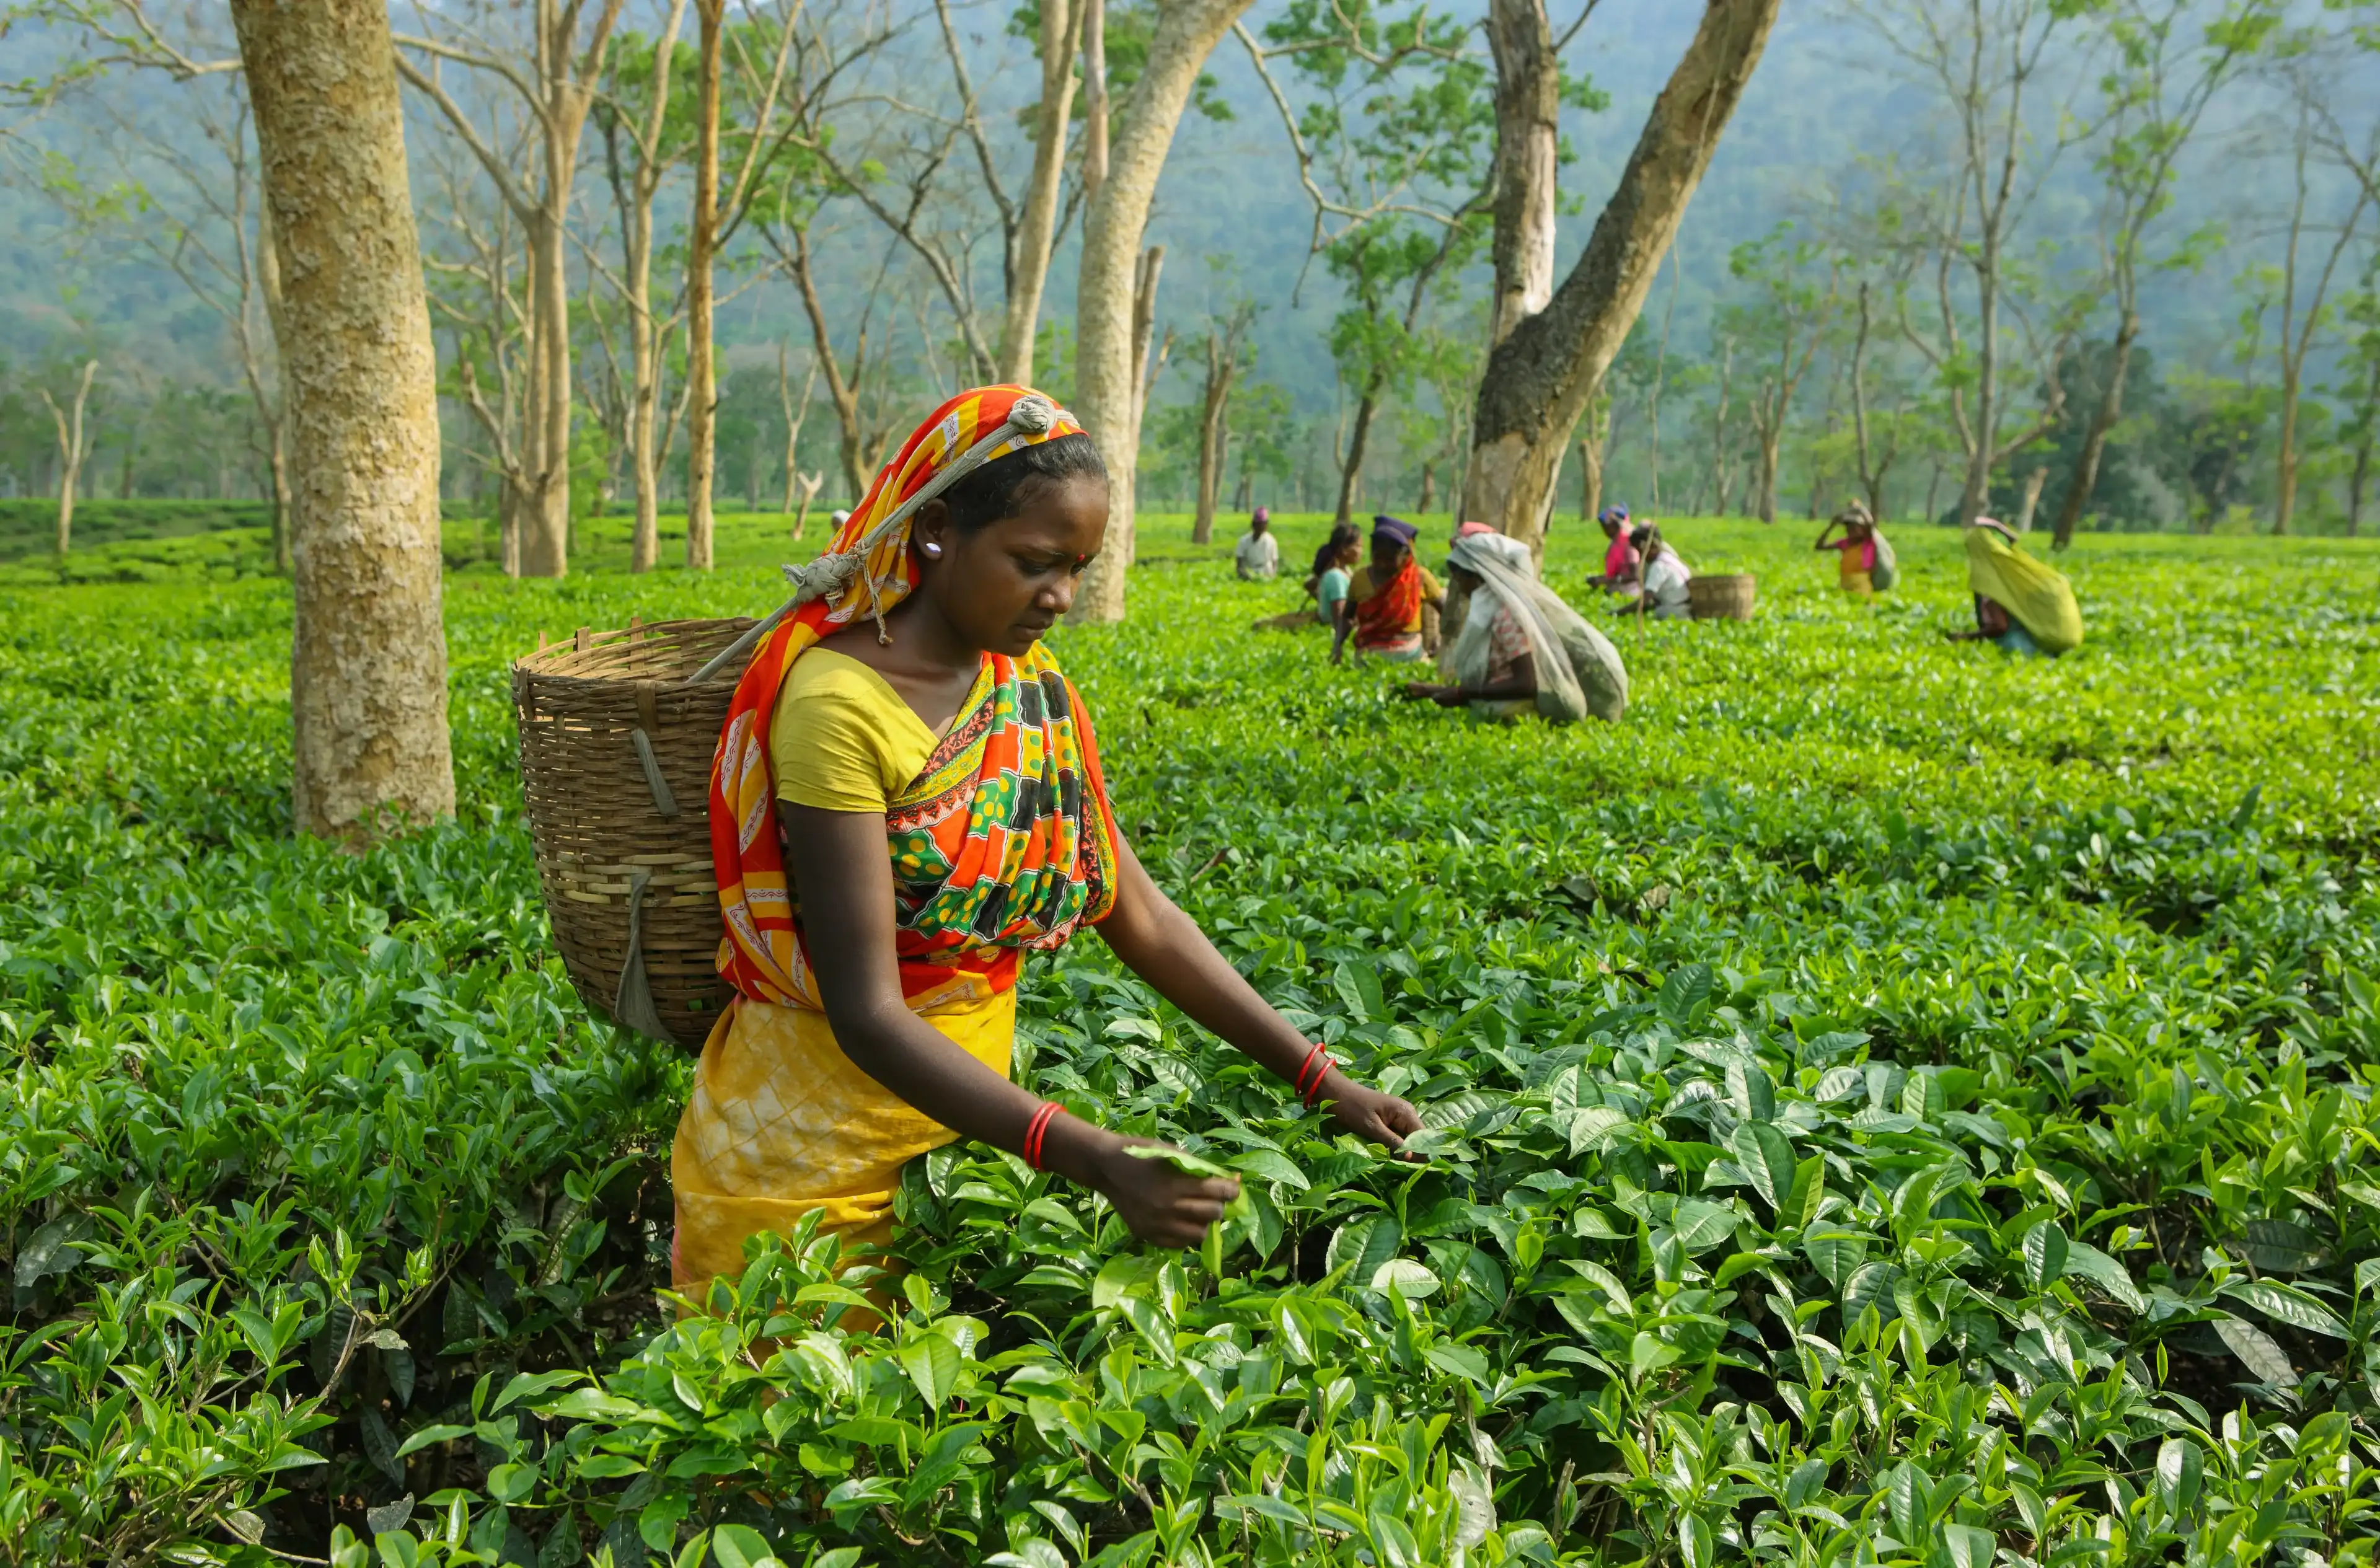 Assam North East ,India, April, 21,2008: Harvesting,Rural women workers plucking tender tea shoots in gardens of Assam, North East, India